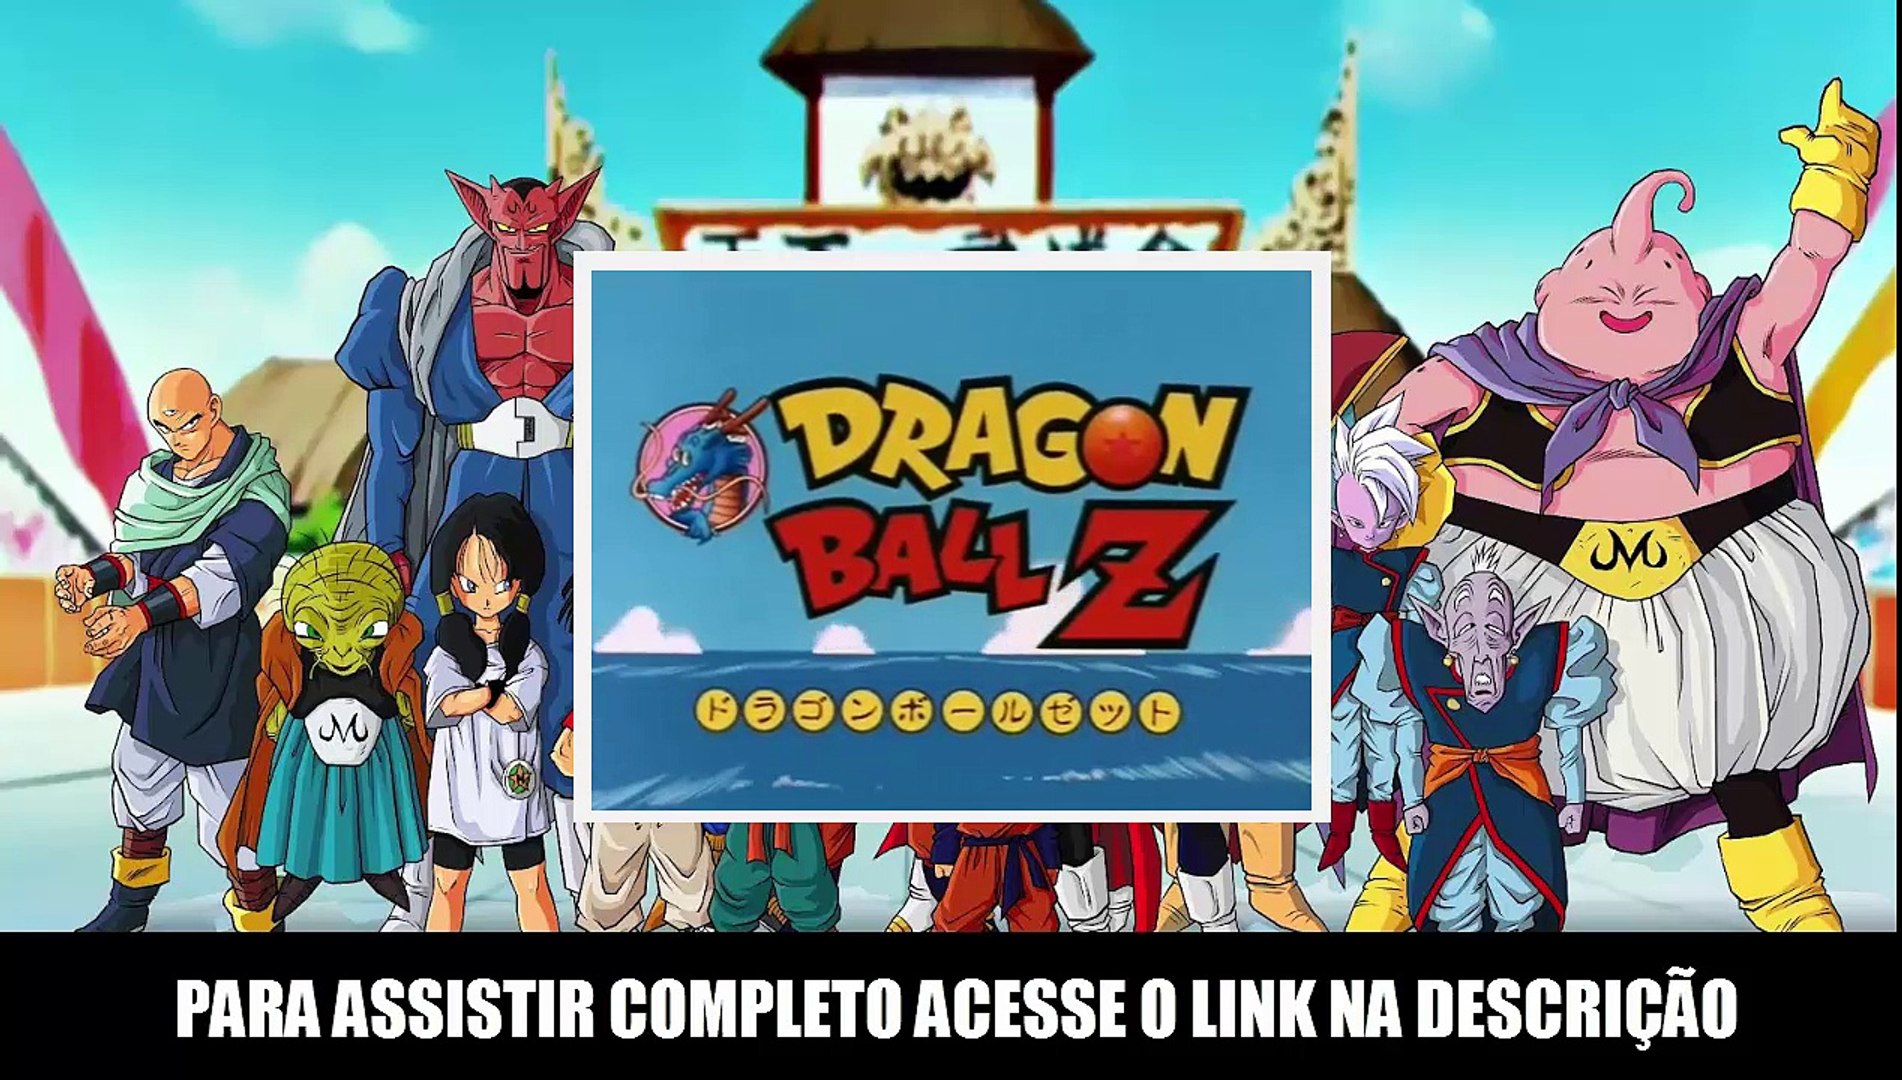 Dragon Ball Z (Dublado) - Assistir Online - Vídeo Dailymotion